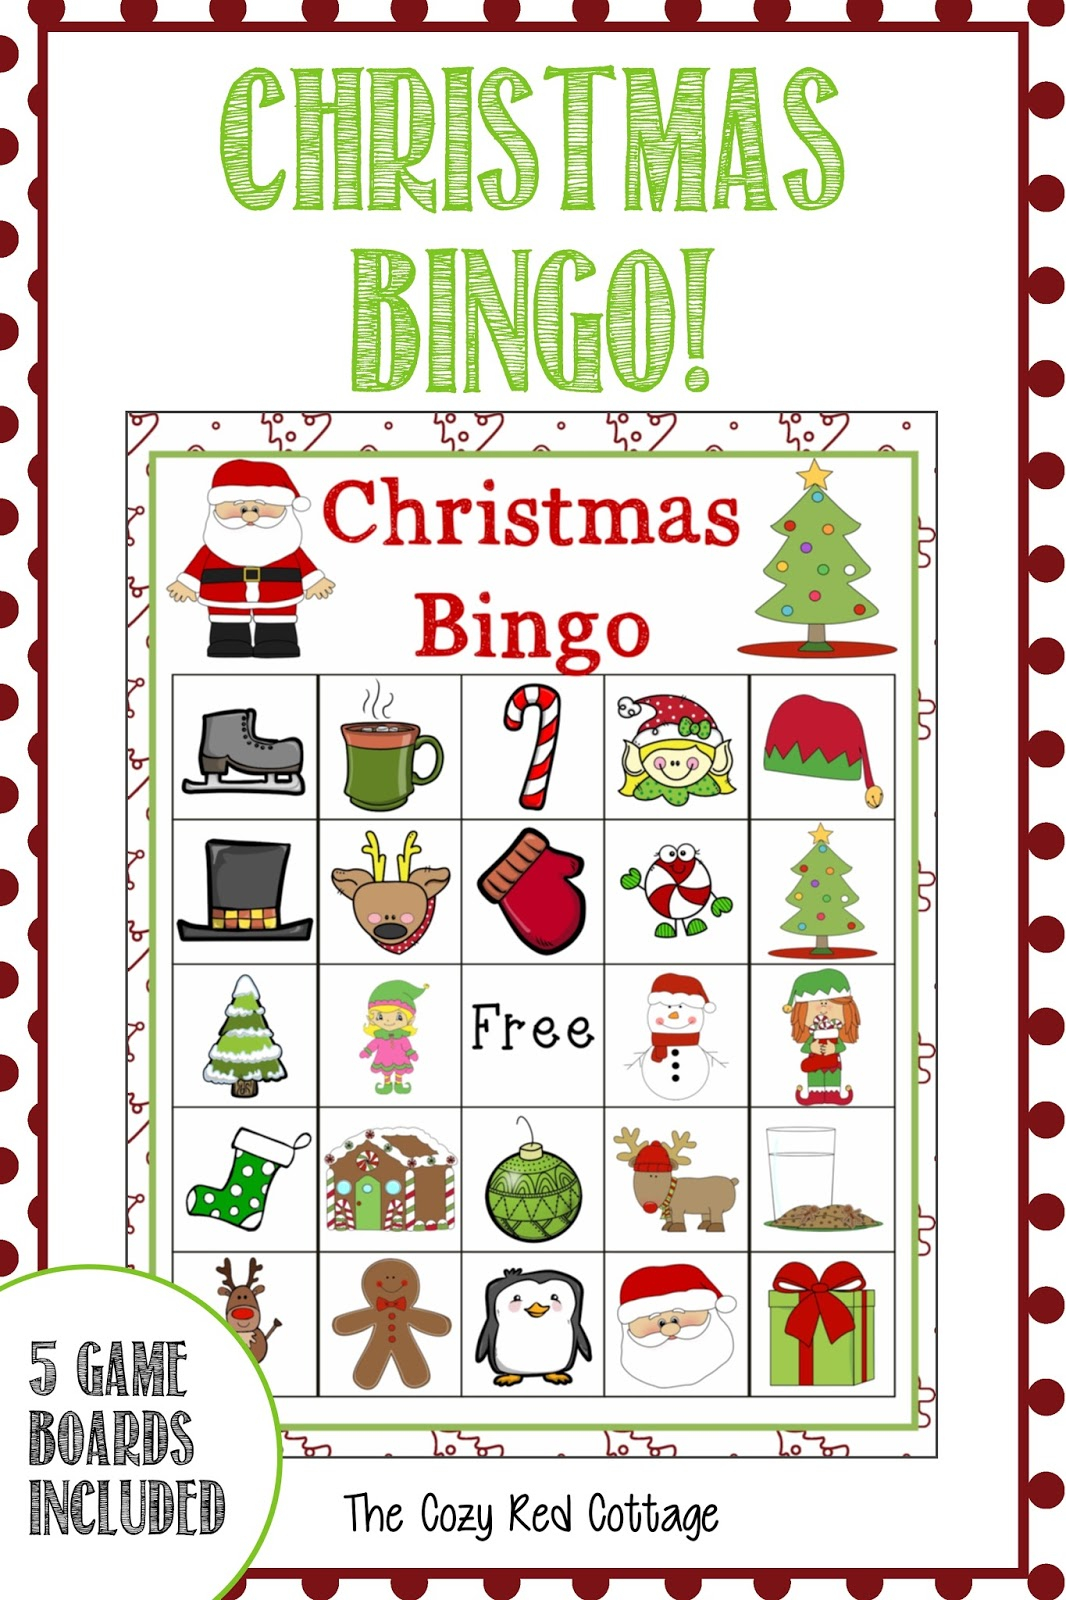 The Cozy Red Cottage Christmas Bingo Free Printable Game 